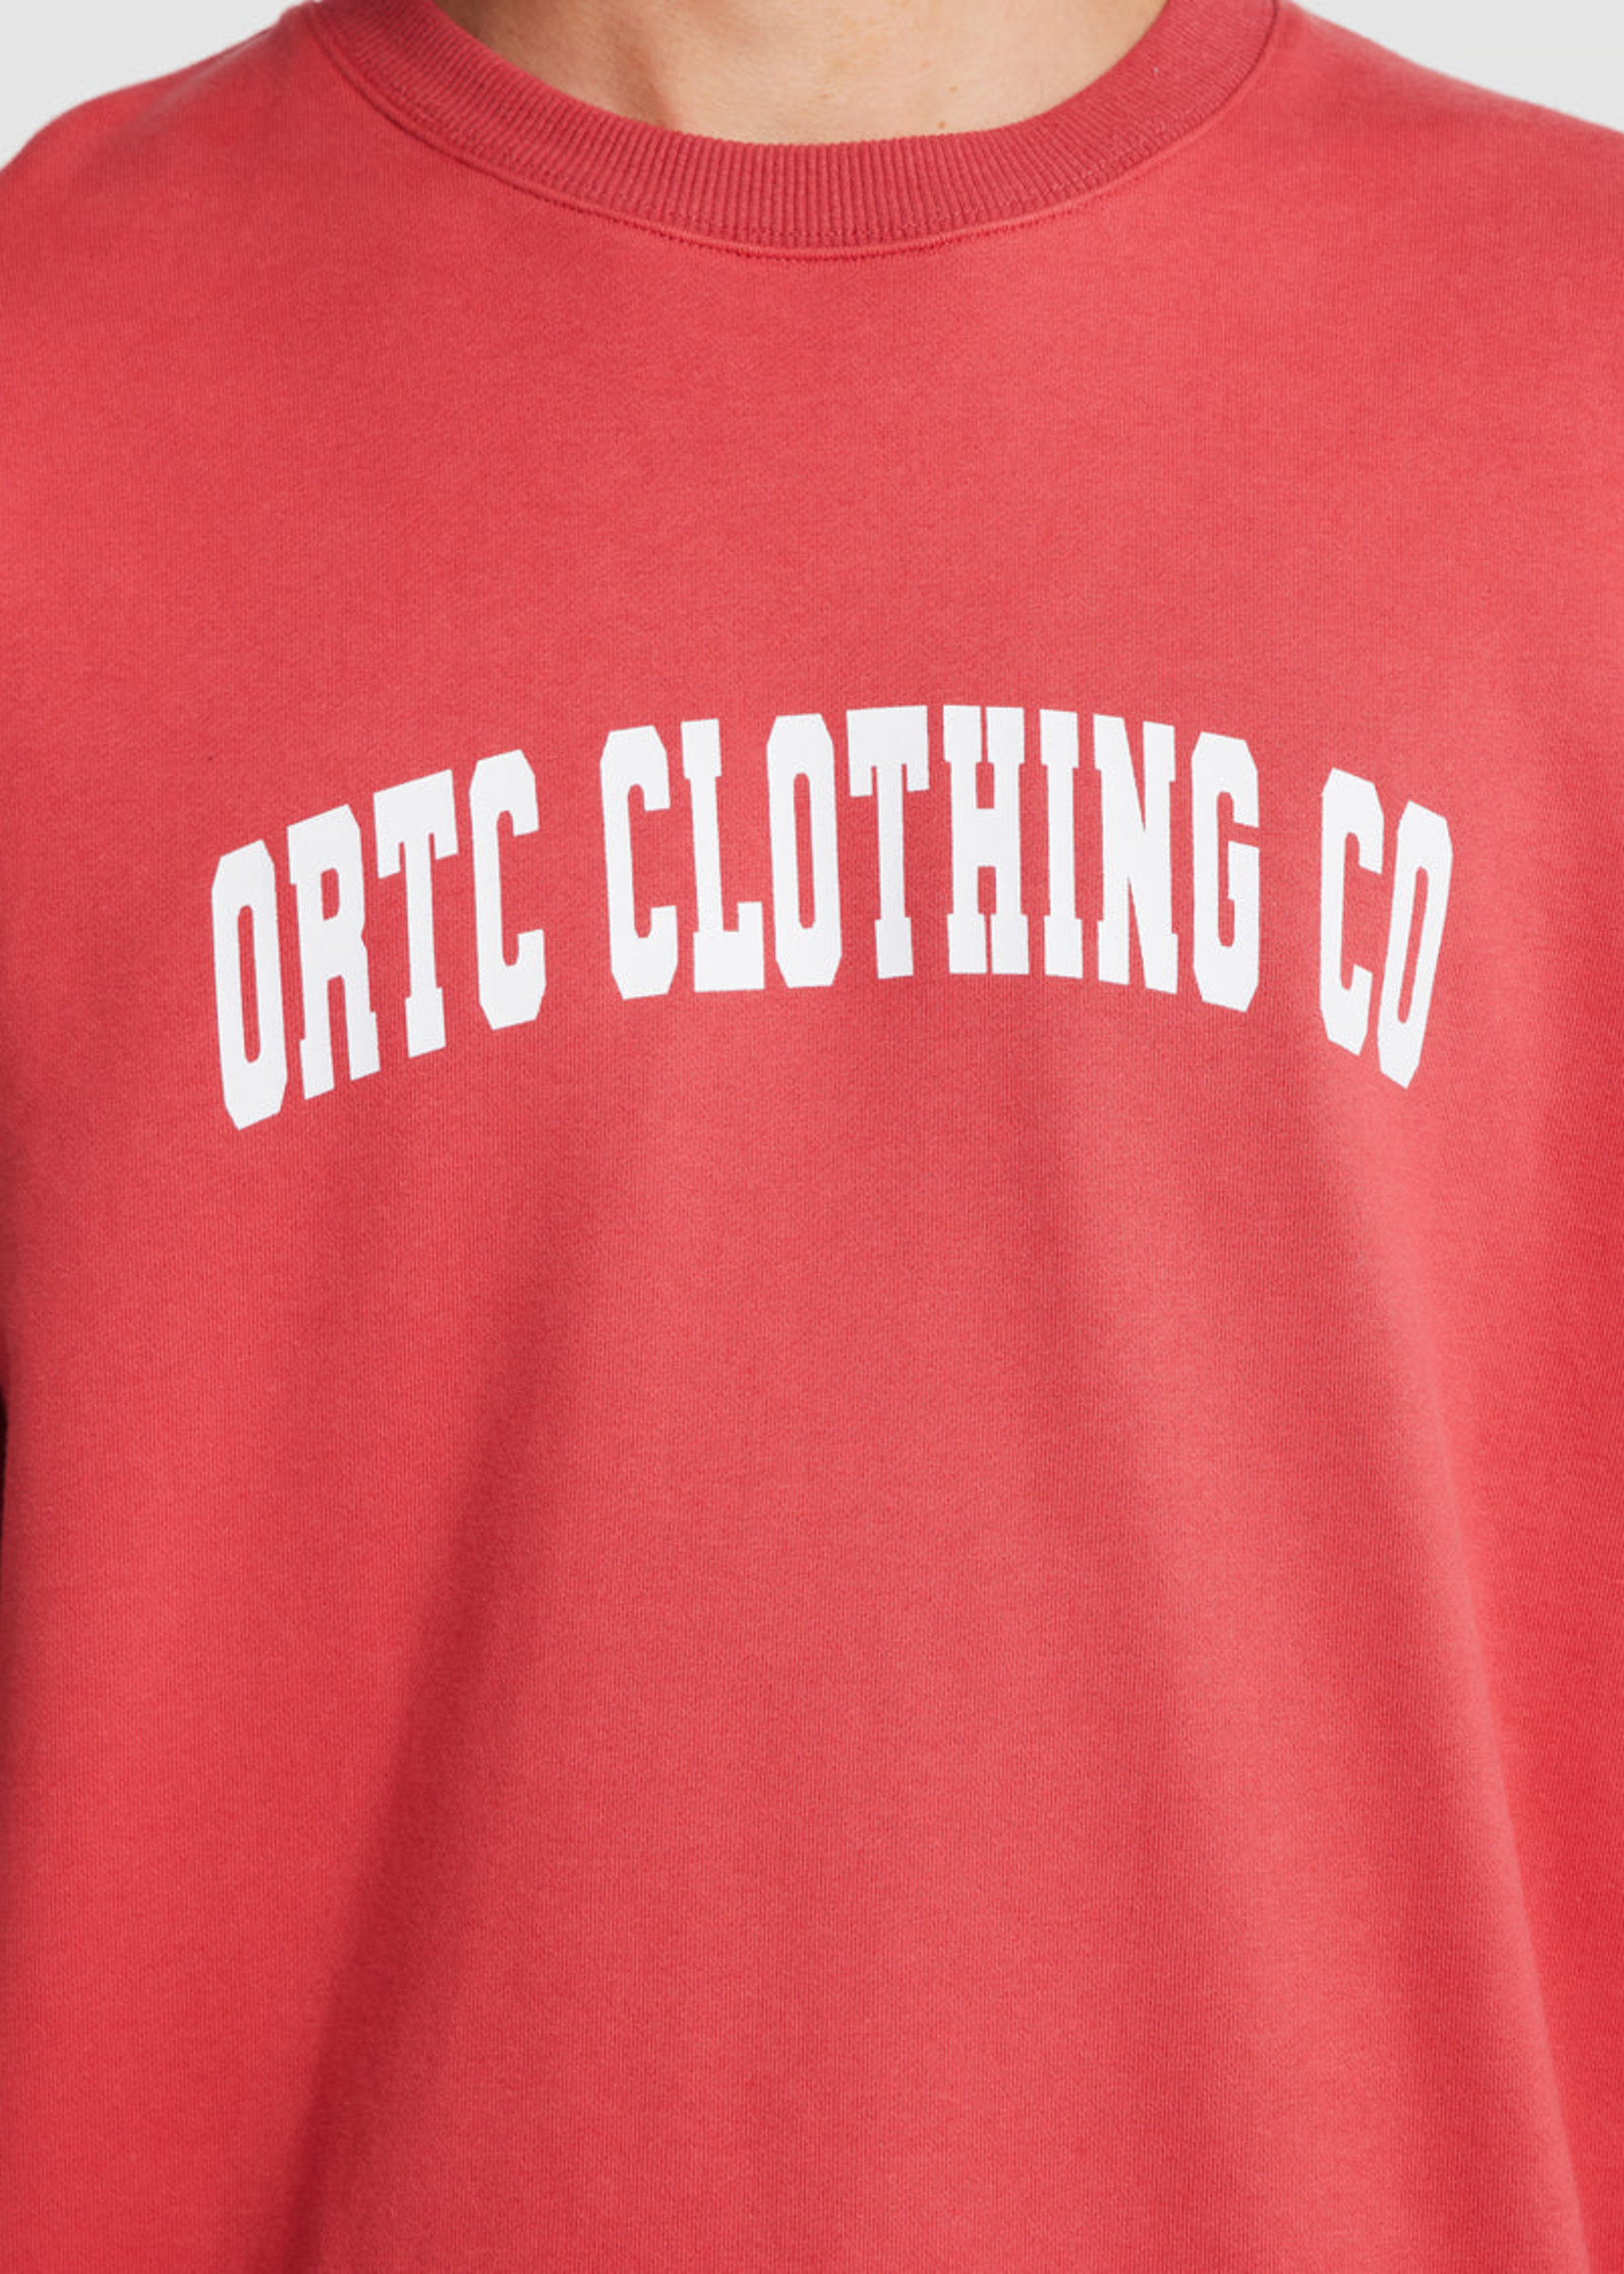 ORTC College Logo Crew (Red)